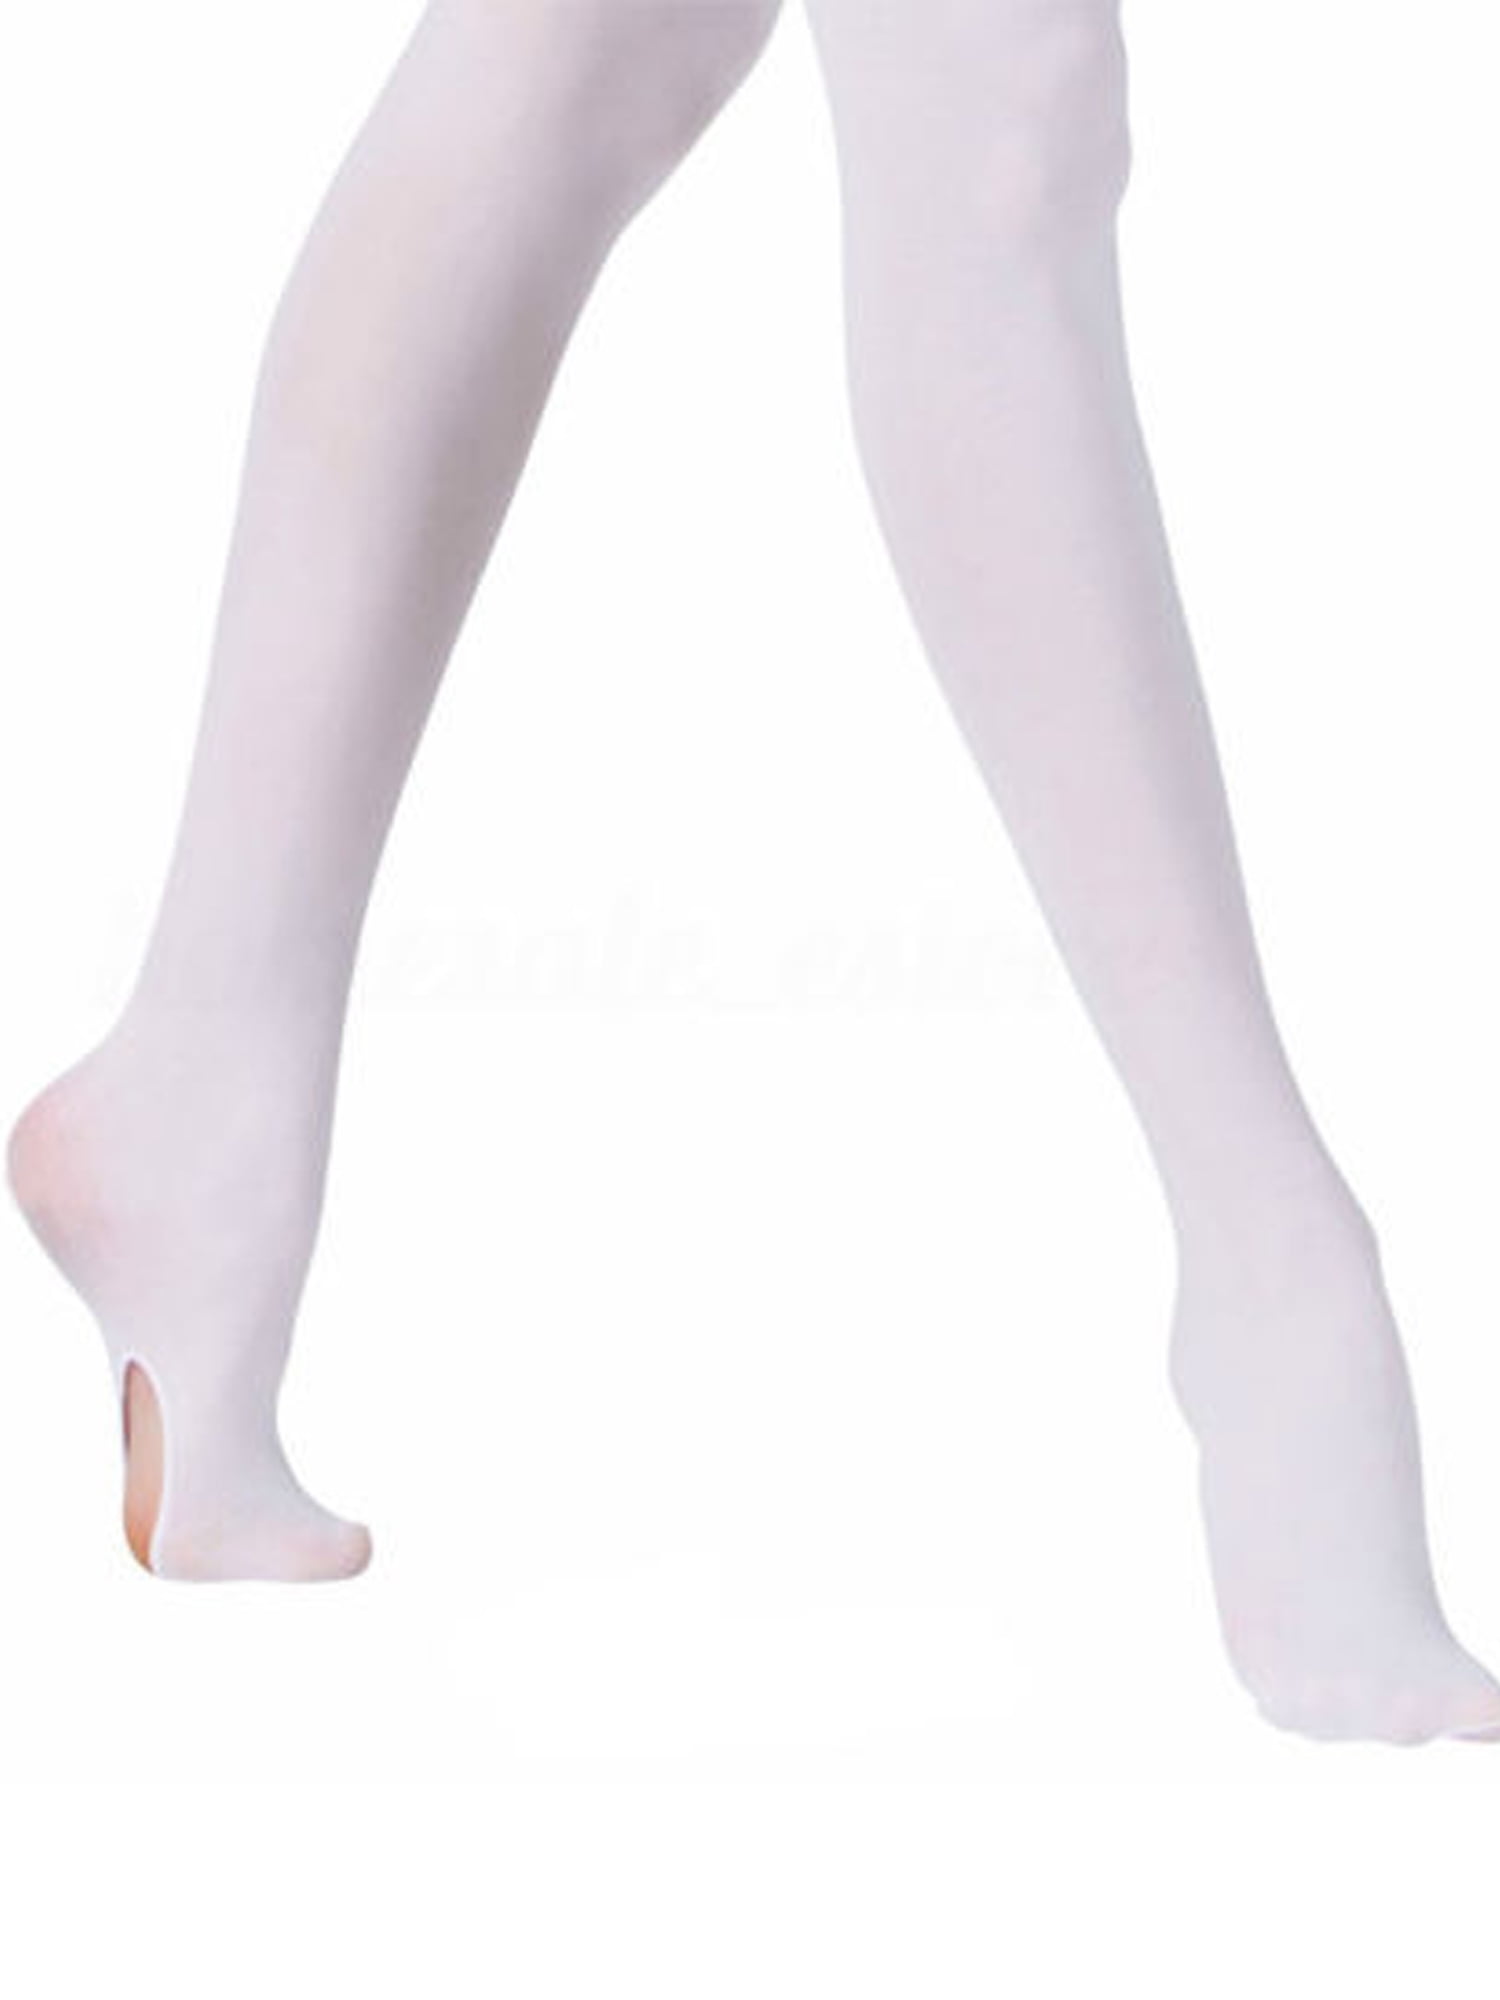 Girl Kid Teen Children 90D Ballet Dance White Stockings Pantyhose Tights  Opaque